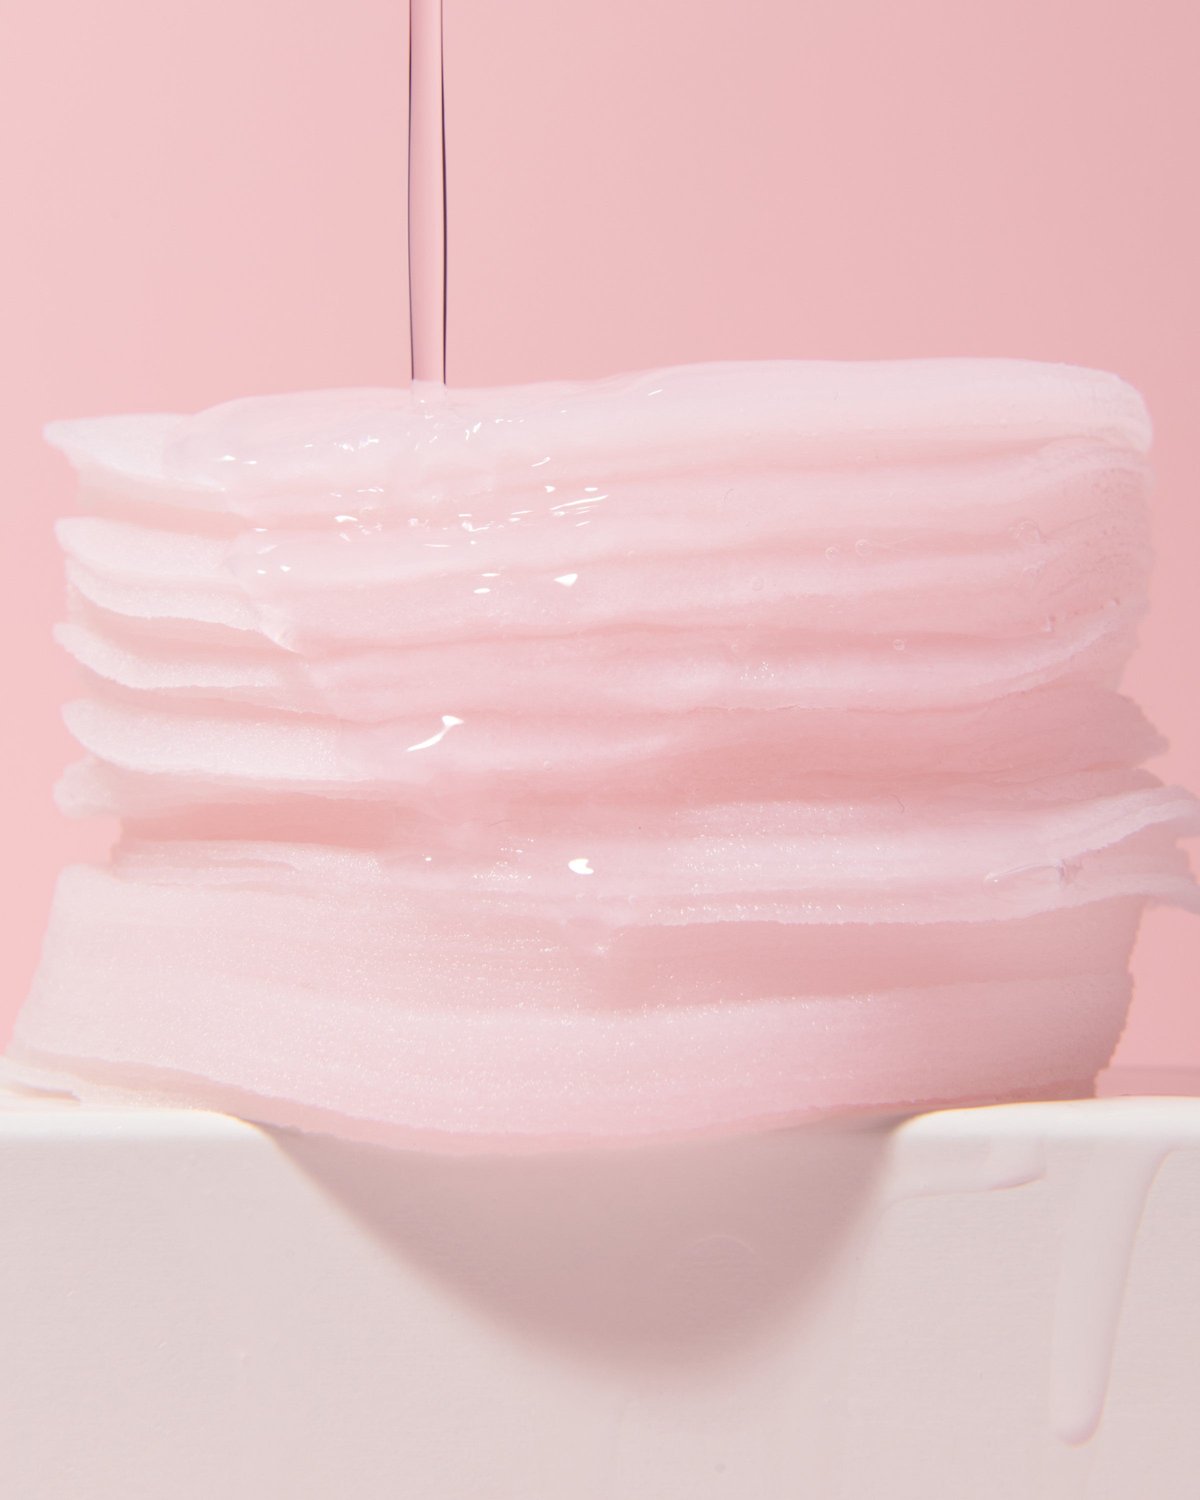 Clean it Zero Pink Hydration Toner Pads – Banila Co